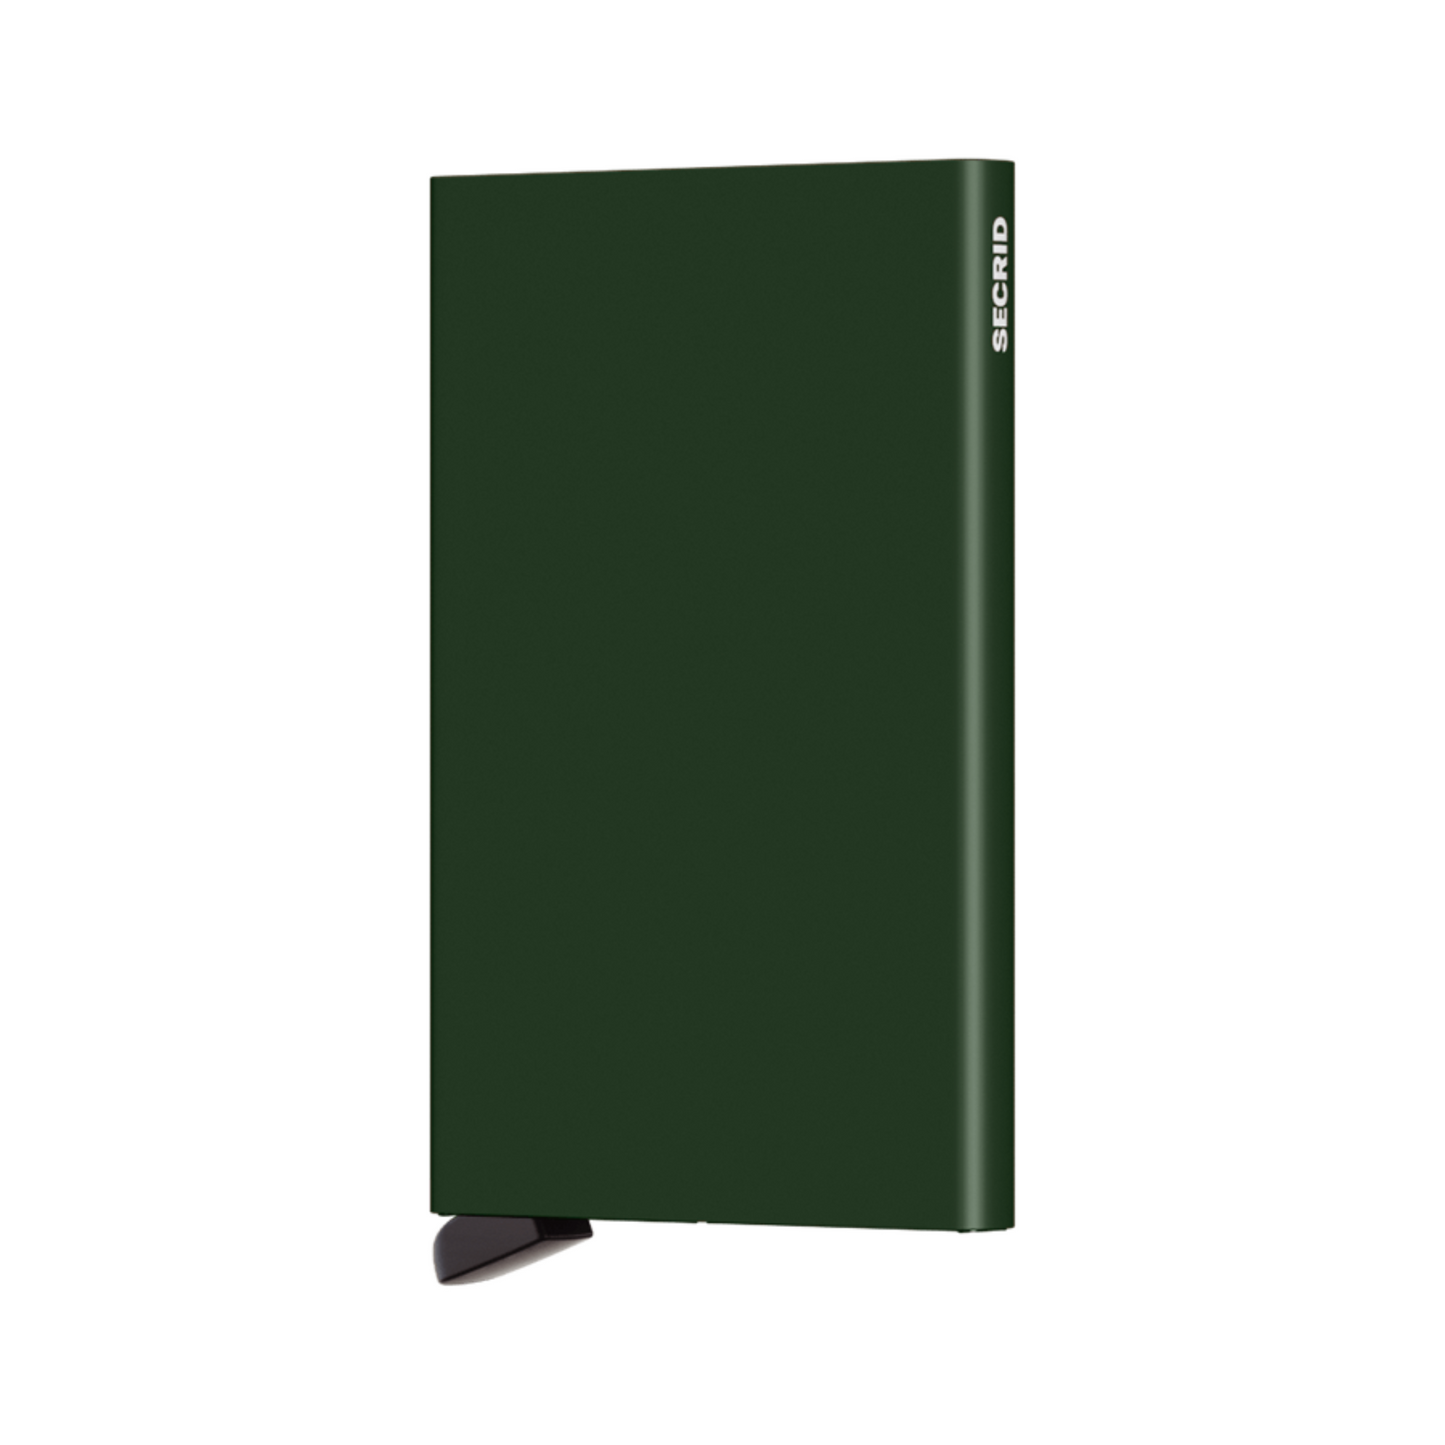 Metallic dark green rectangular wallet with black bottom tab and small white logo on side.